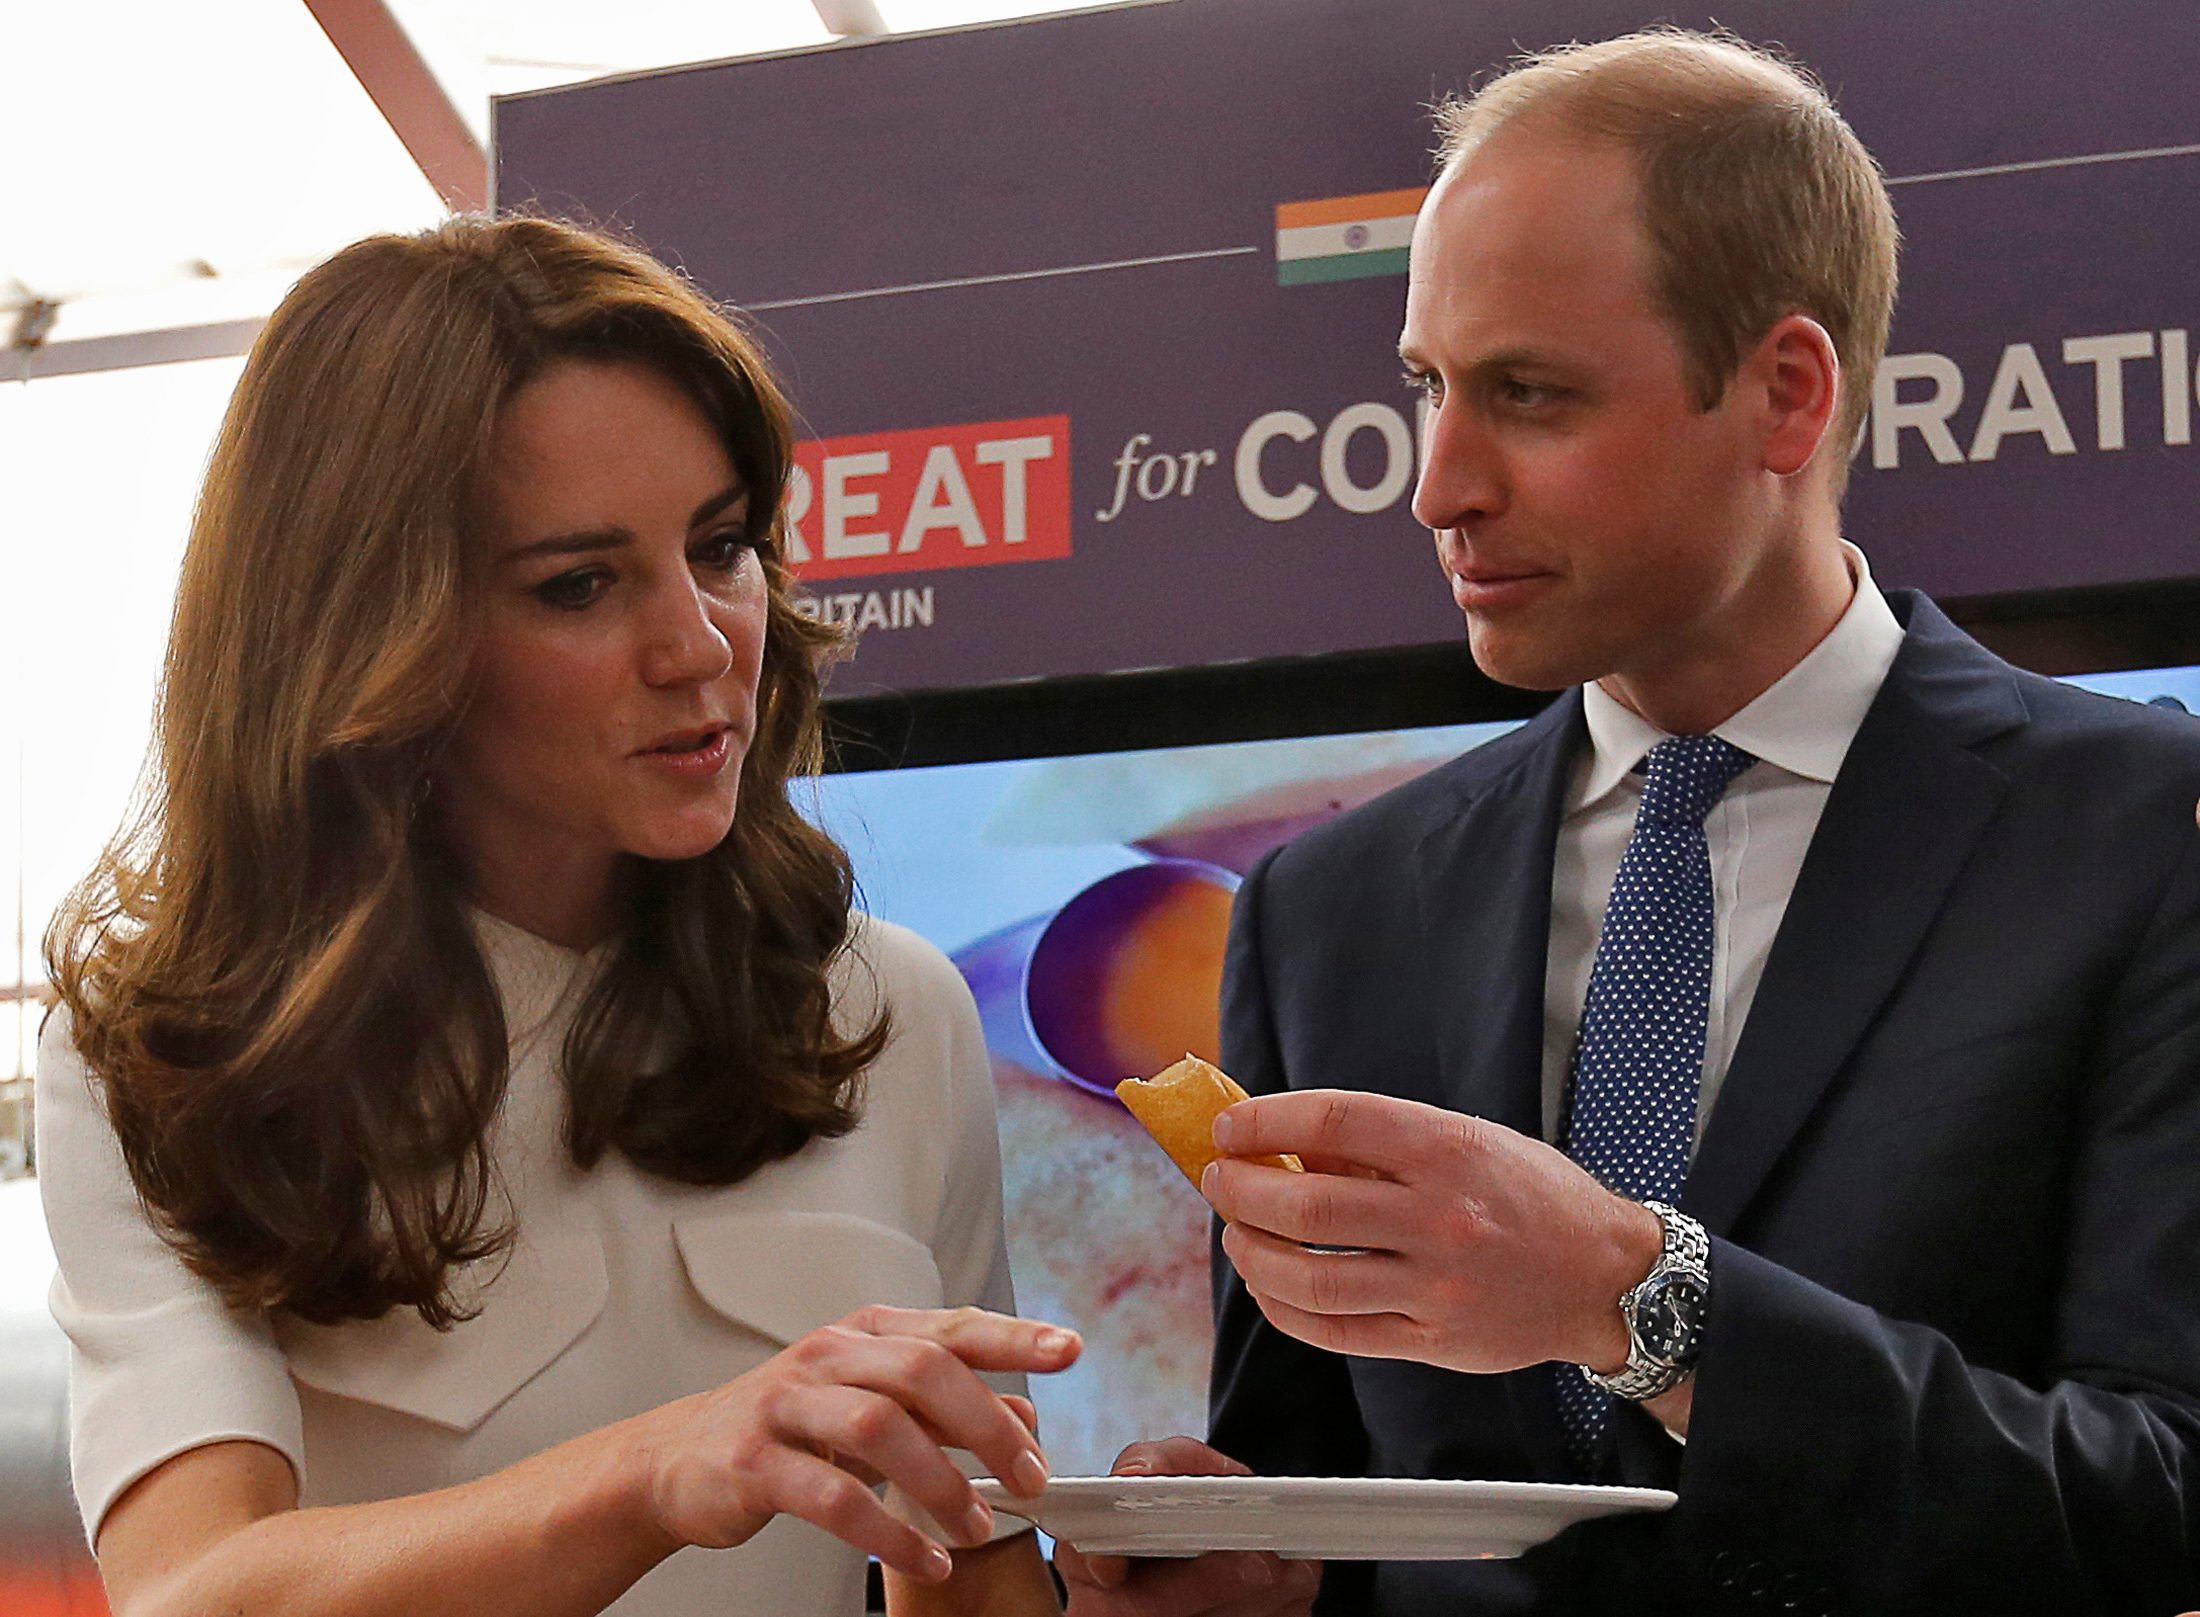 IN PHOTOS: Prince William, Kate Middleton’s trip to India